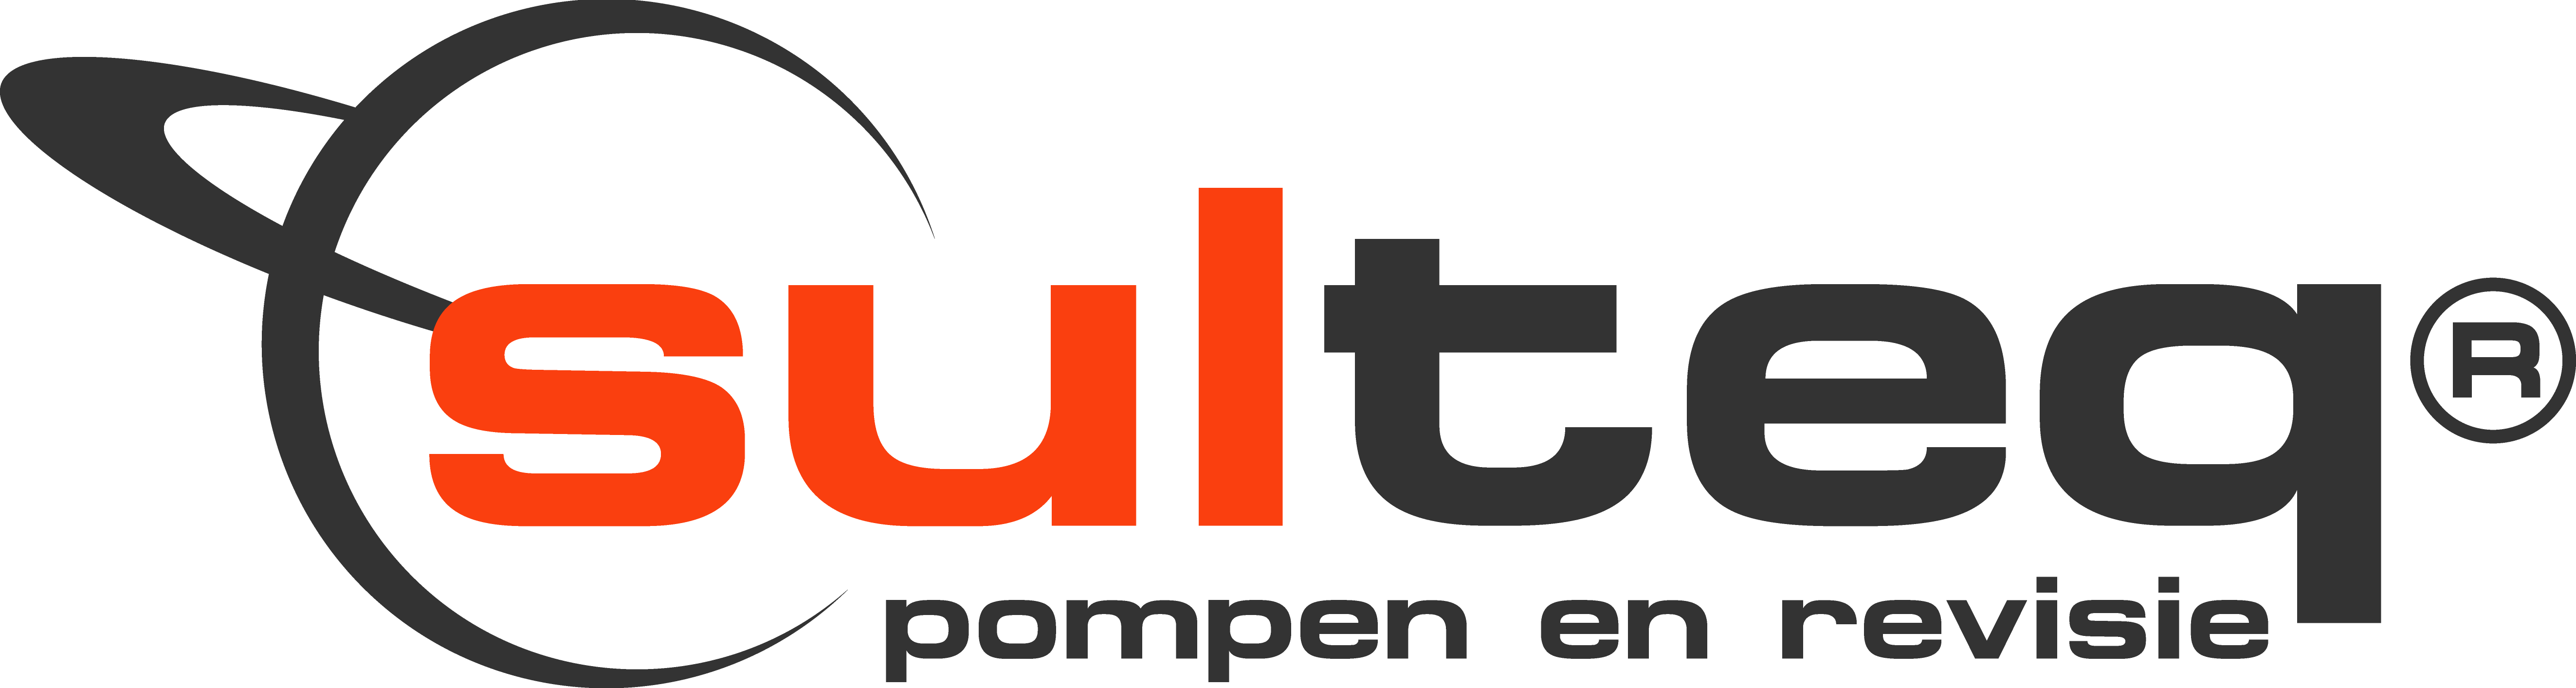 Logo Sulteq pompen en revisie